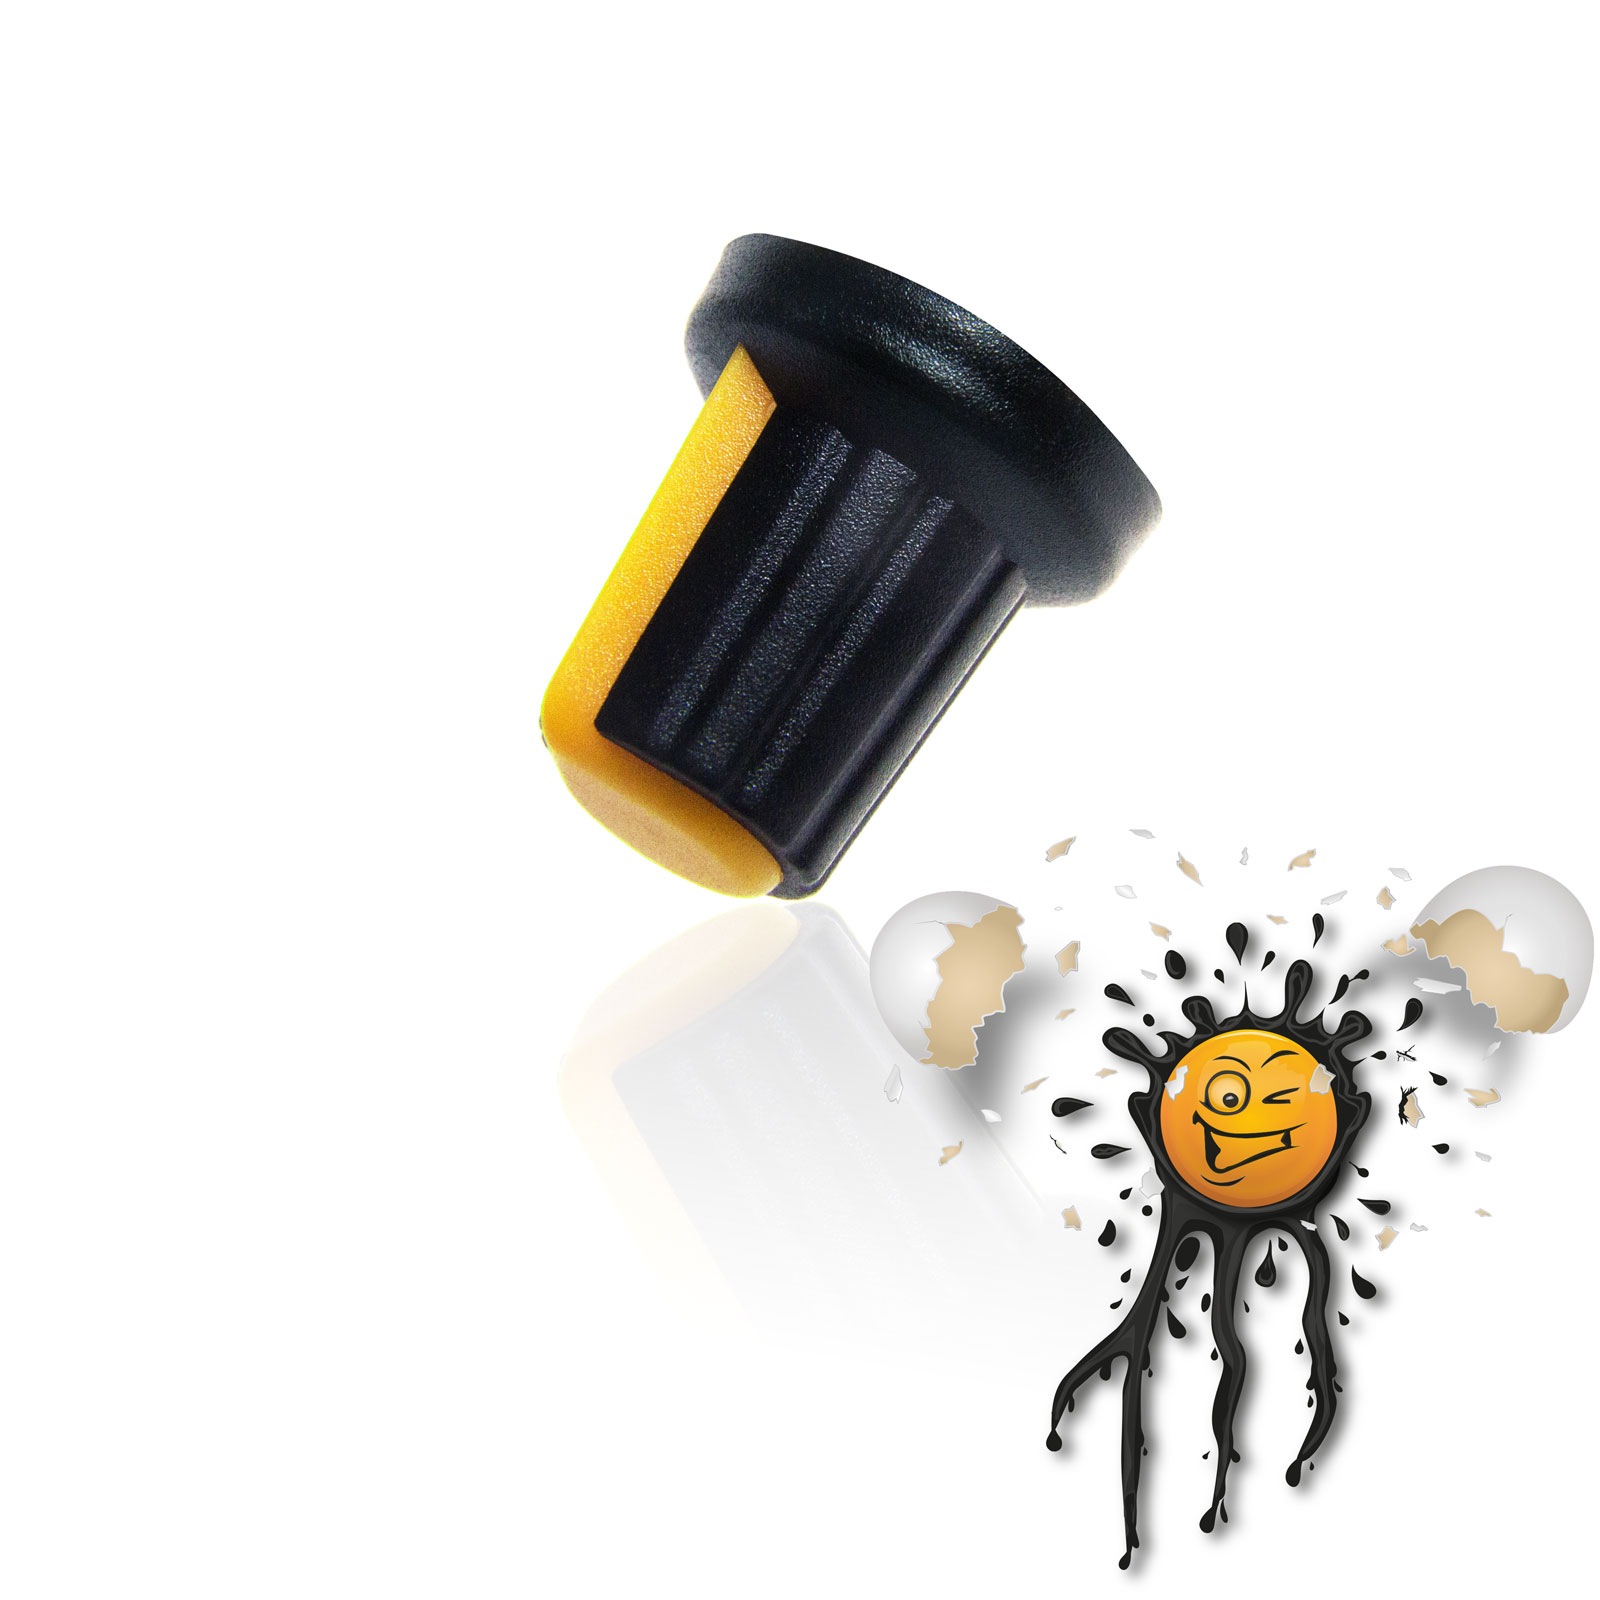 Potentiometer Kunststoff Drehknopf Farbe gelb 6 mm – IoT powered by